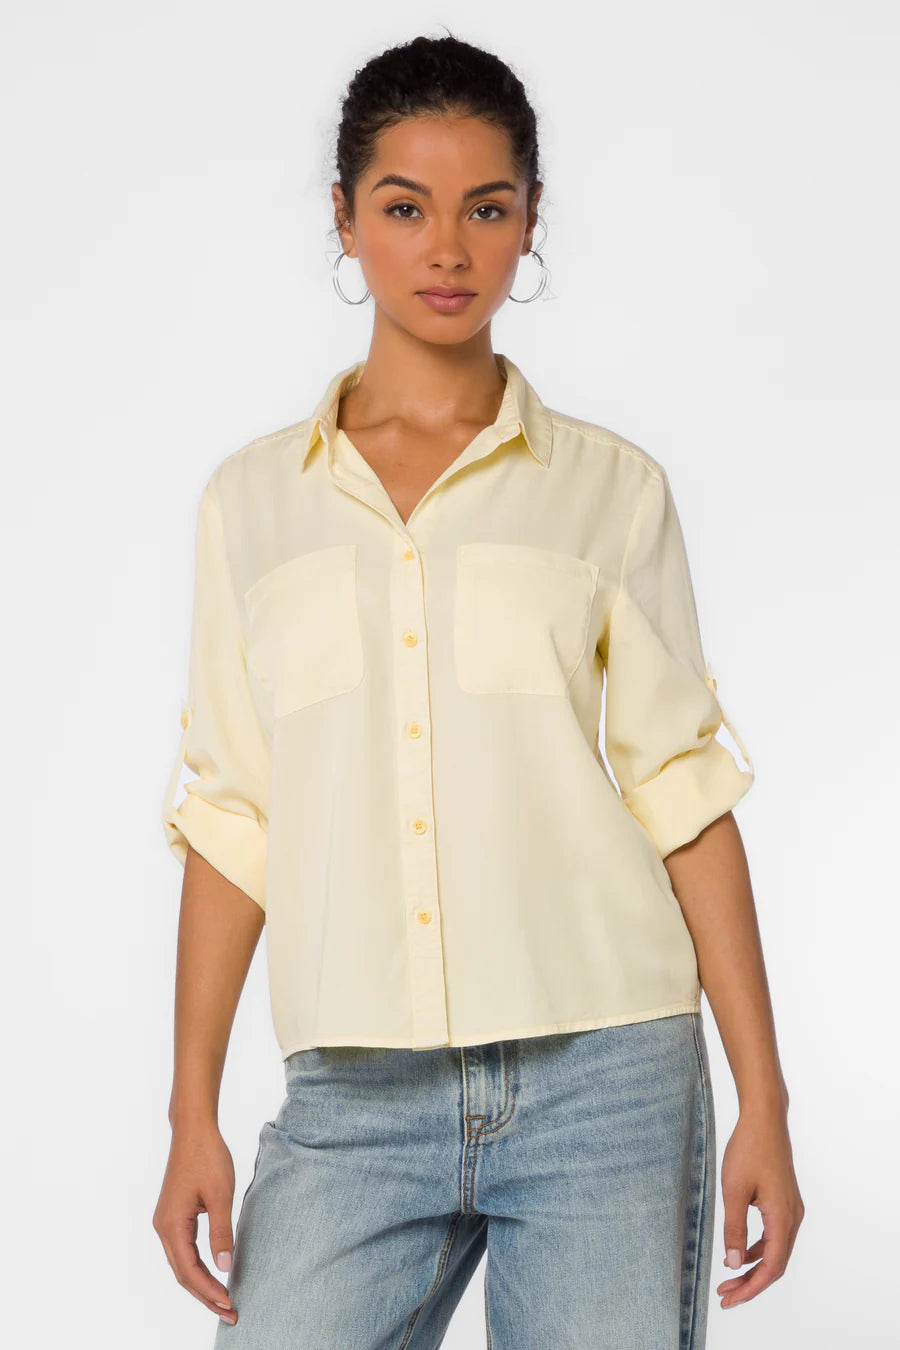 Lucia Pastel Yellow Shirt